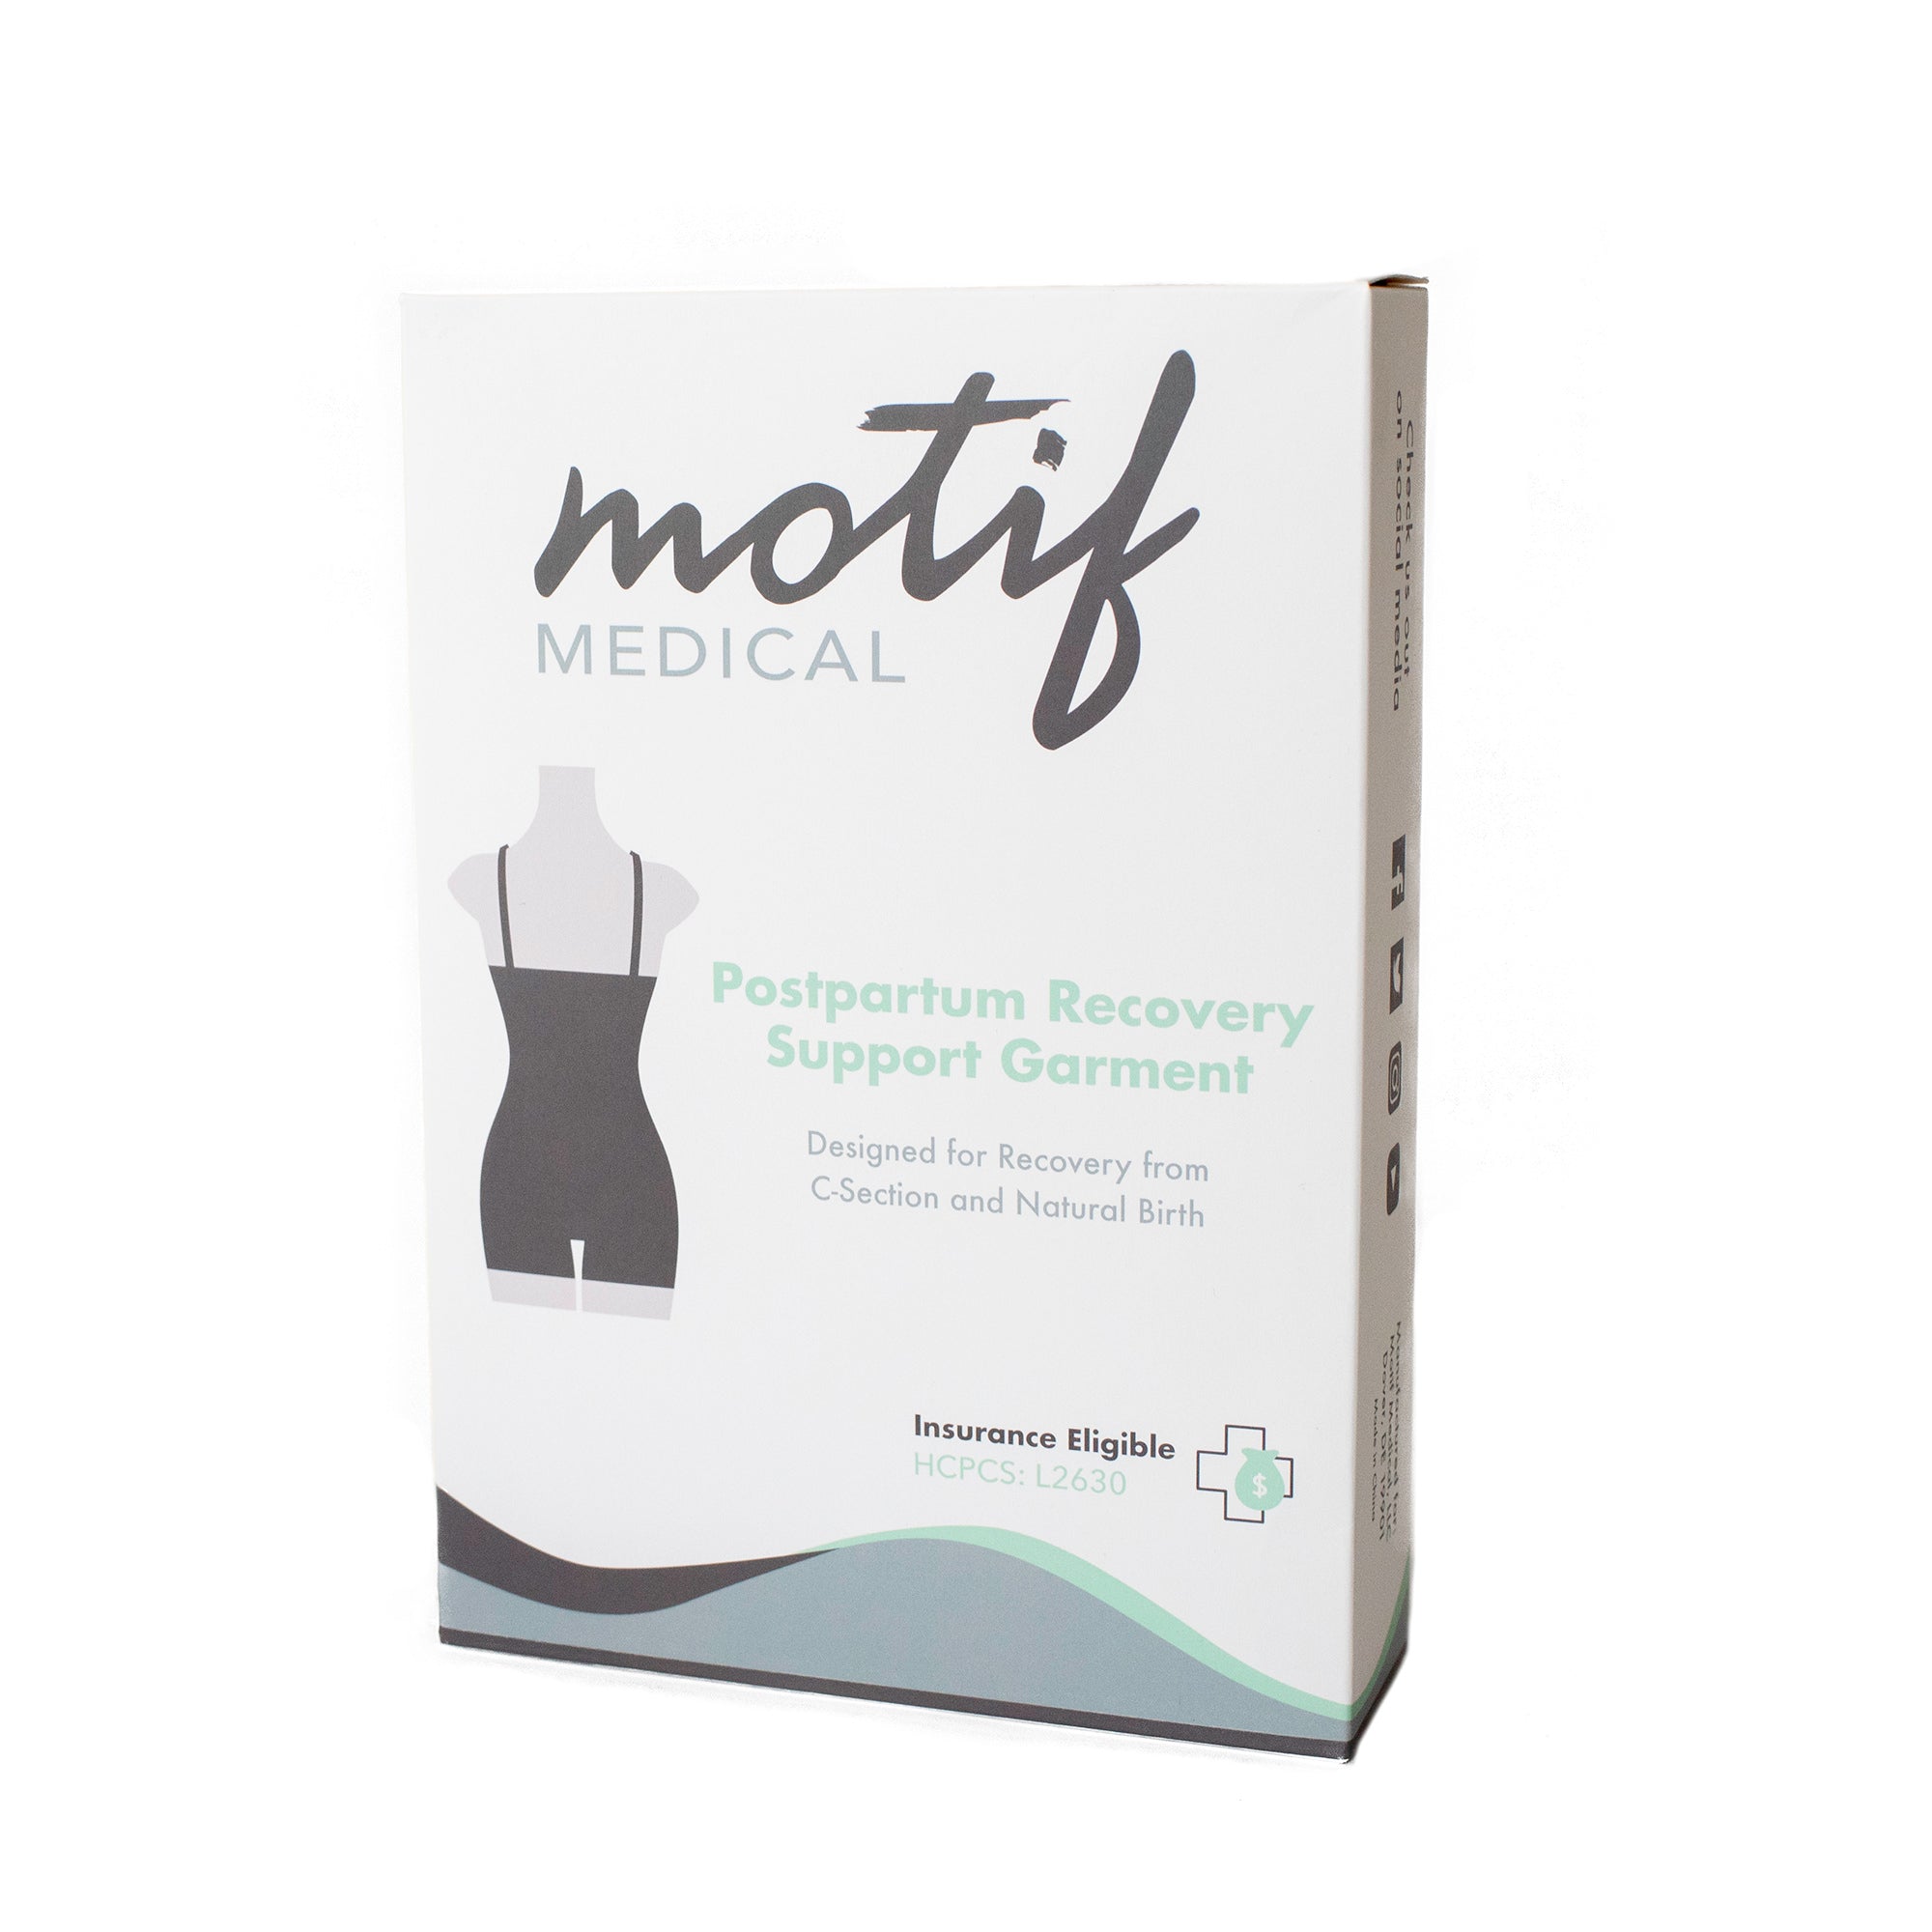 Motif Postpartum Recovery Support Garment - Nurture Medical